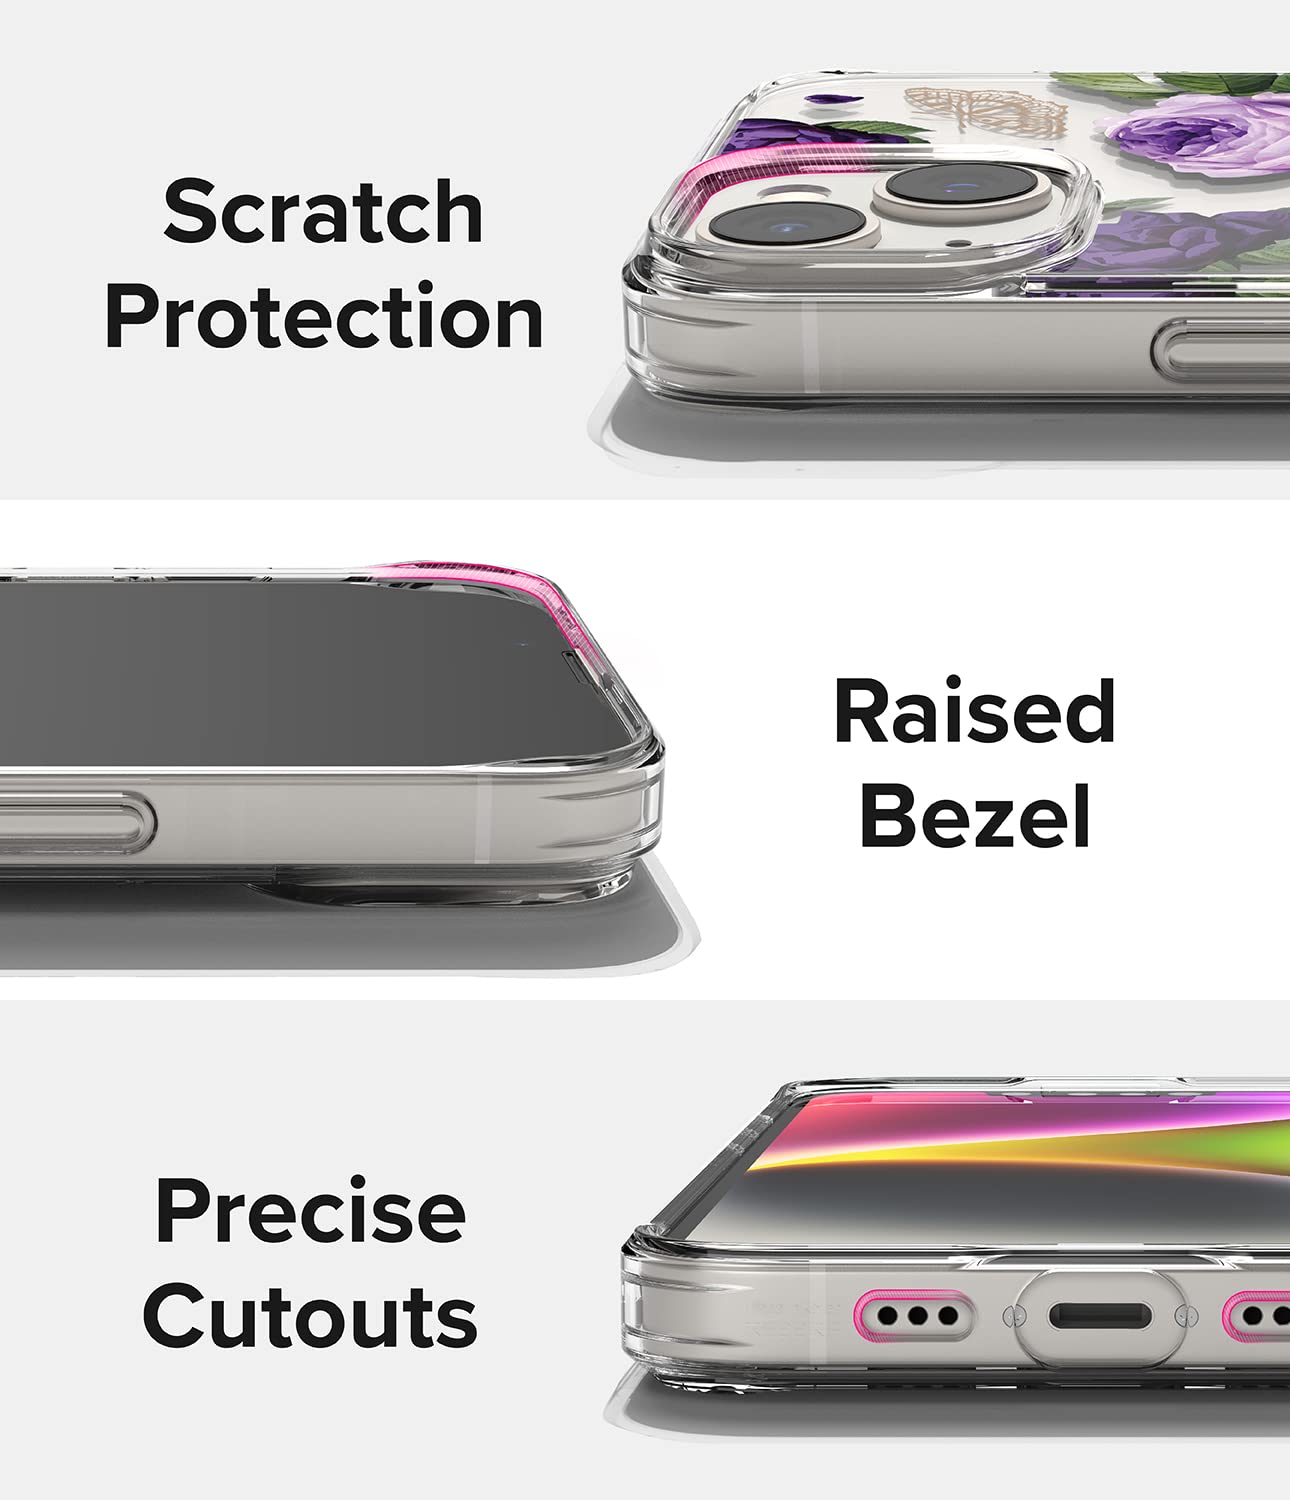  iPhone 14 Pink, Orange, Purple skewed squares Case : Cell  Phones & Accessories